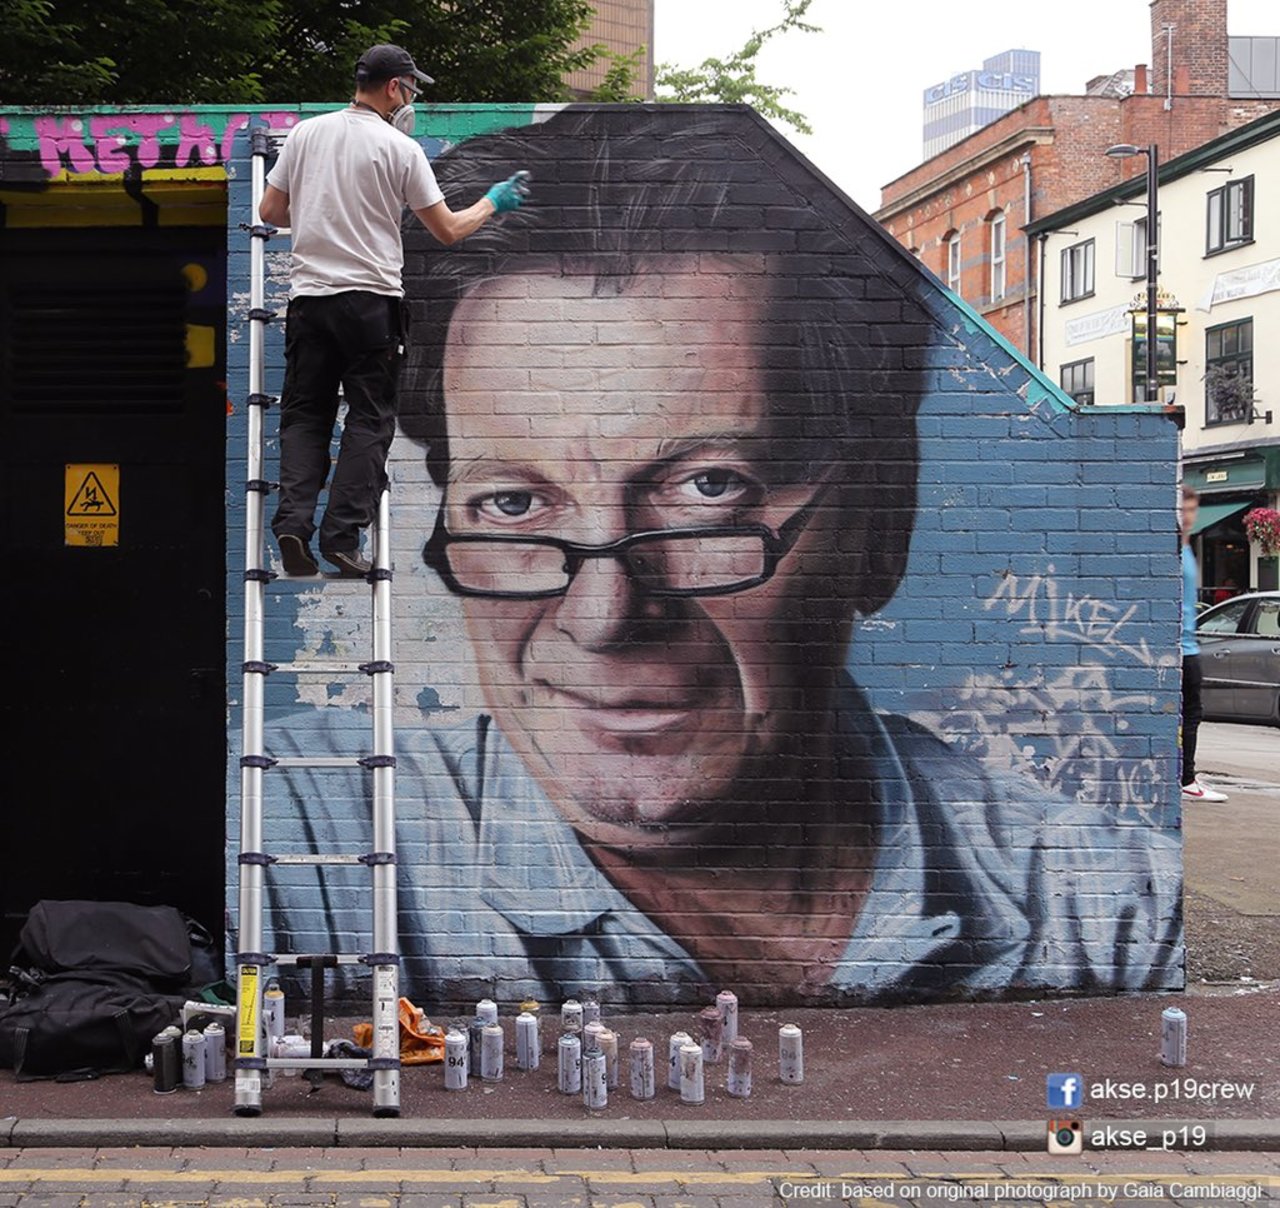 Wip portrait of #tonywilson aka Mr Manchester on Tib street in #northernquarter NQ #akse #p19 #mcr #graffiti #art #streetart #hacienda #fac51 #factoryrecords #manchester https://t.co/jPFBQdCPc0